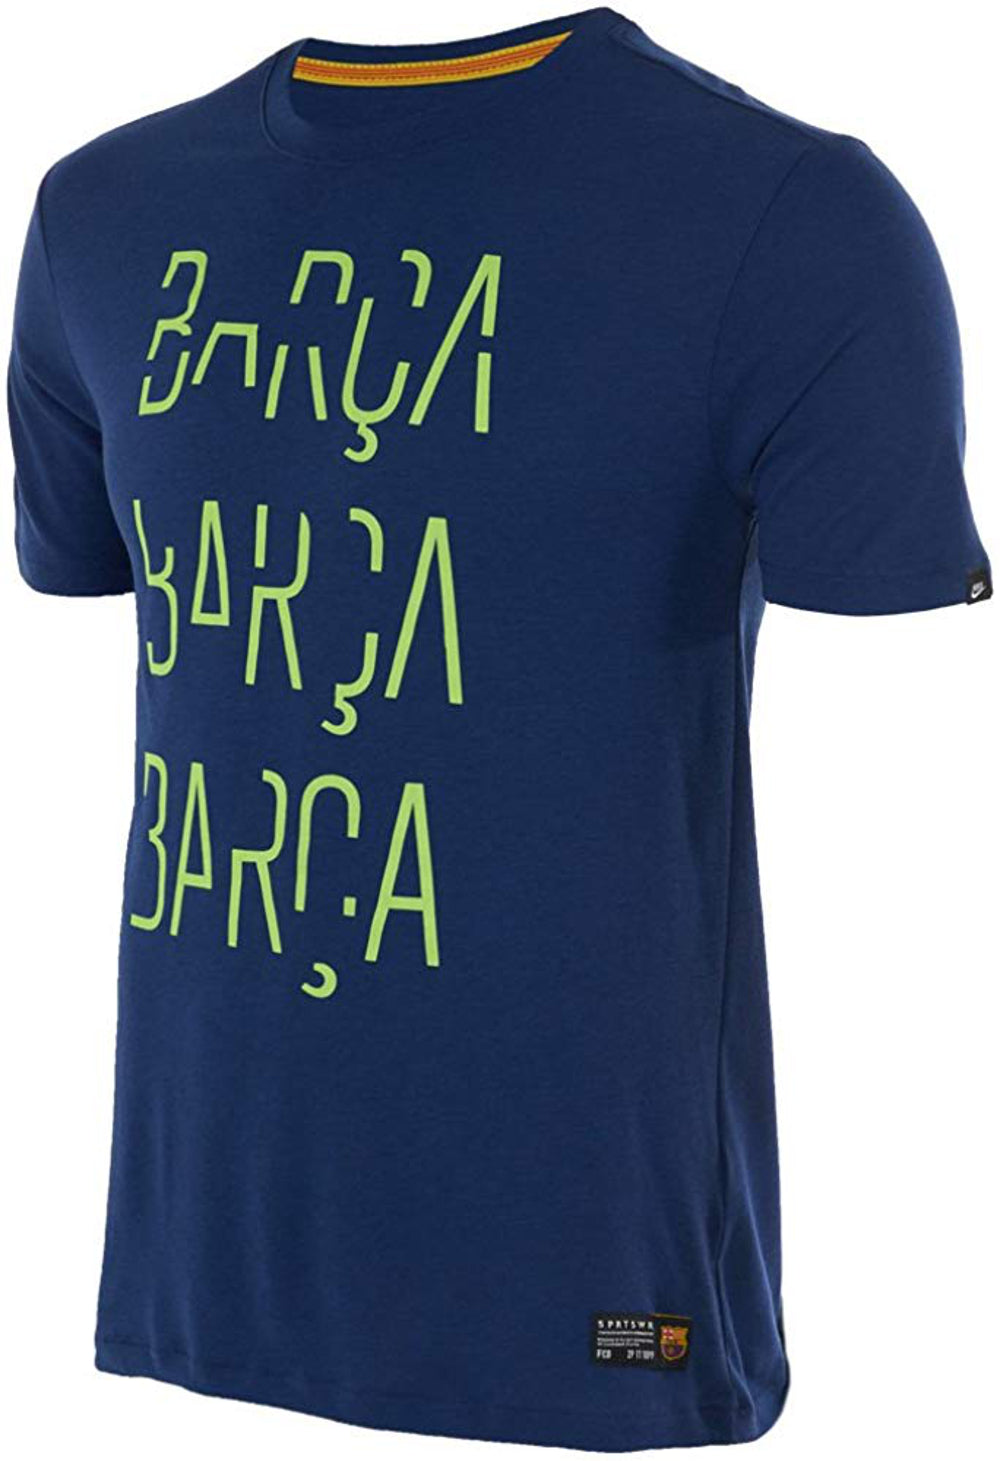 Nike Mens Football Club Barcelona Covert T Shirt